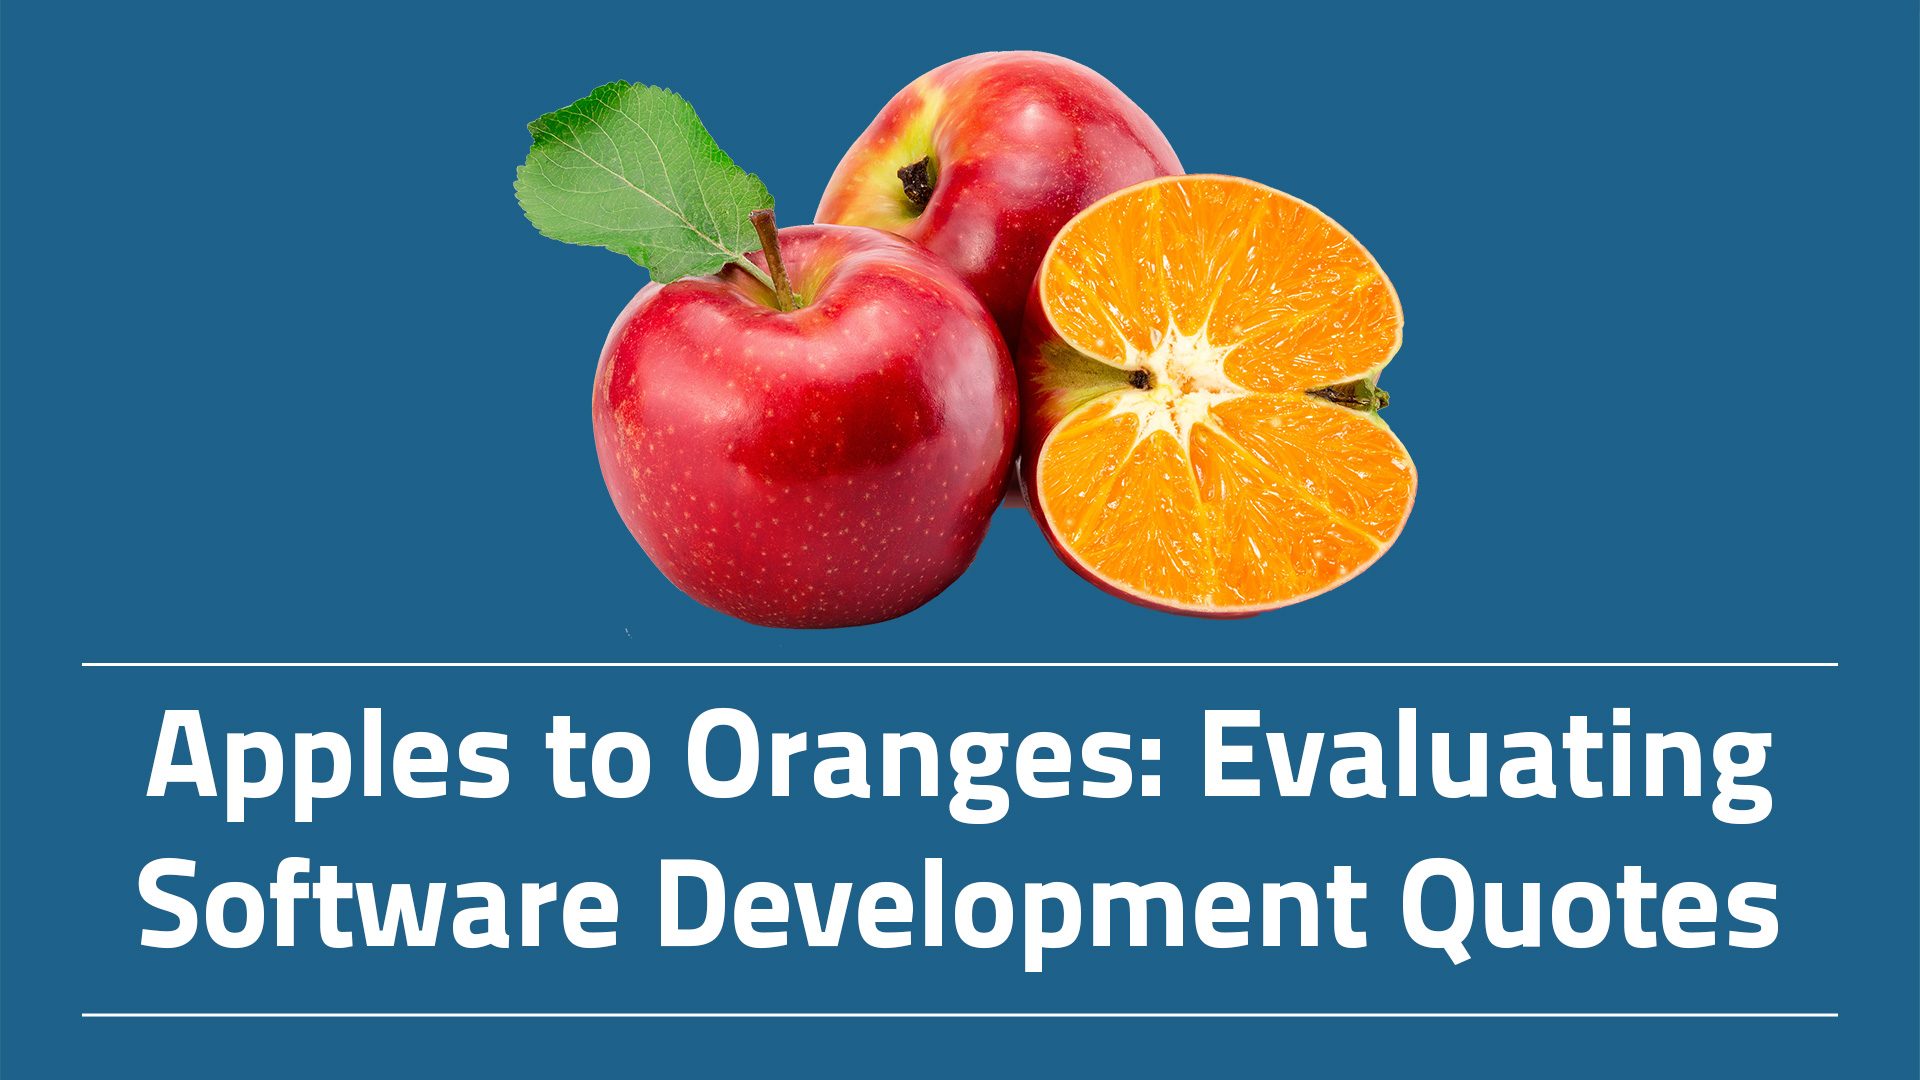 Evaluating Software Development Quotes